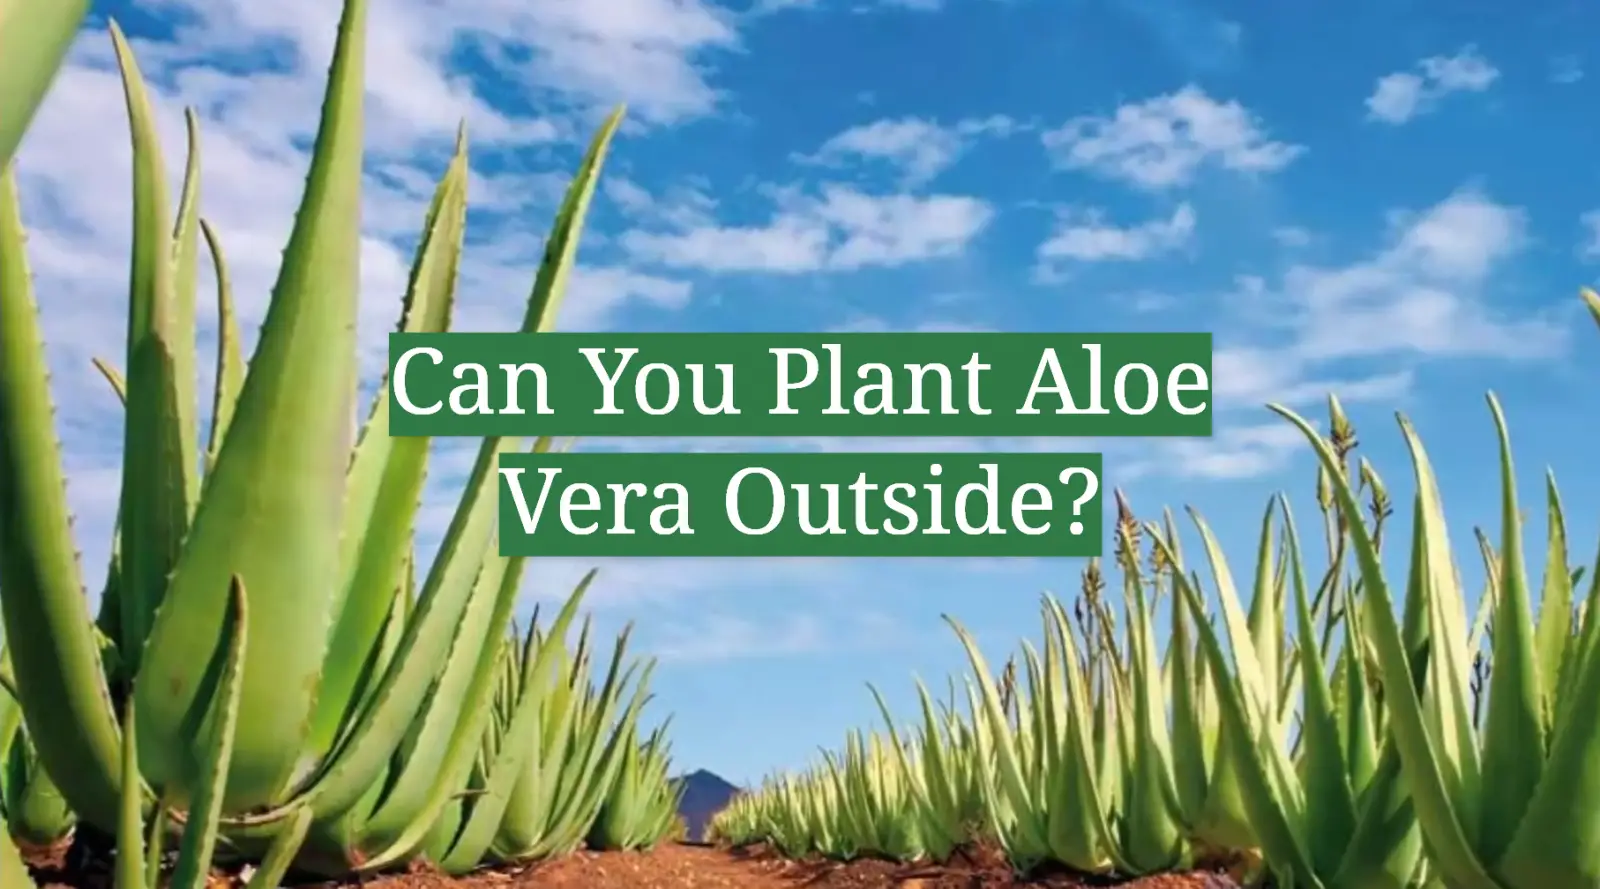 Can You Plant Aloe Vera Outside?